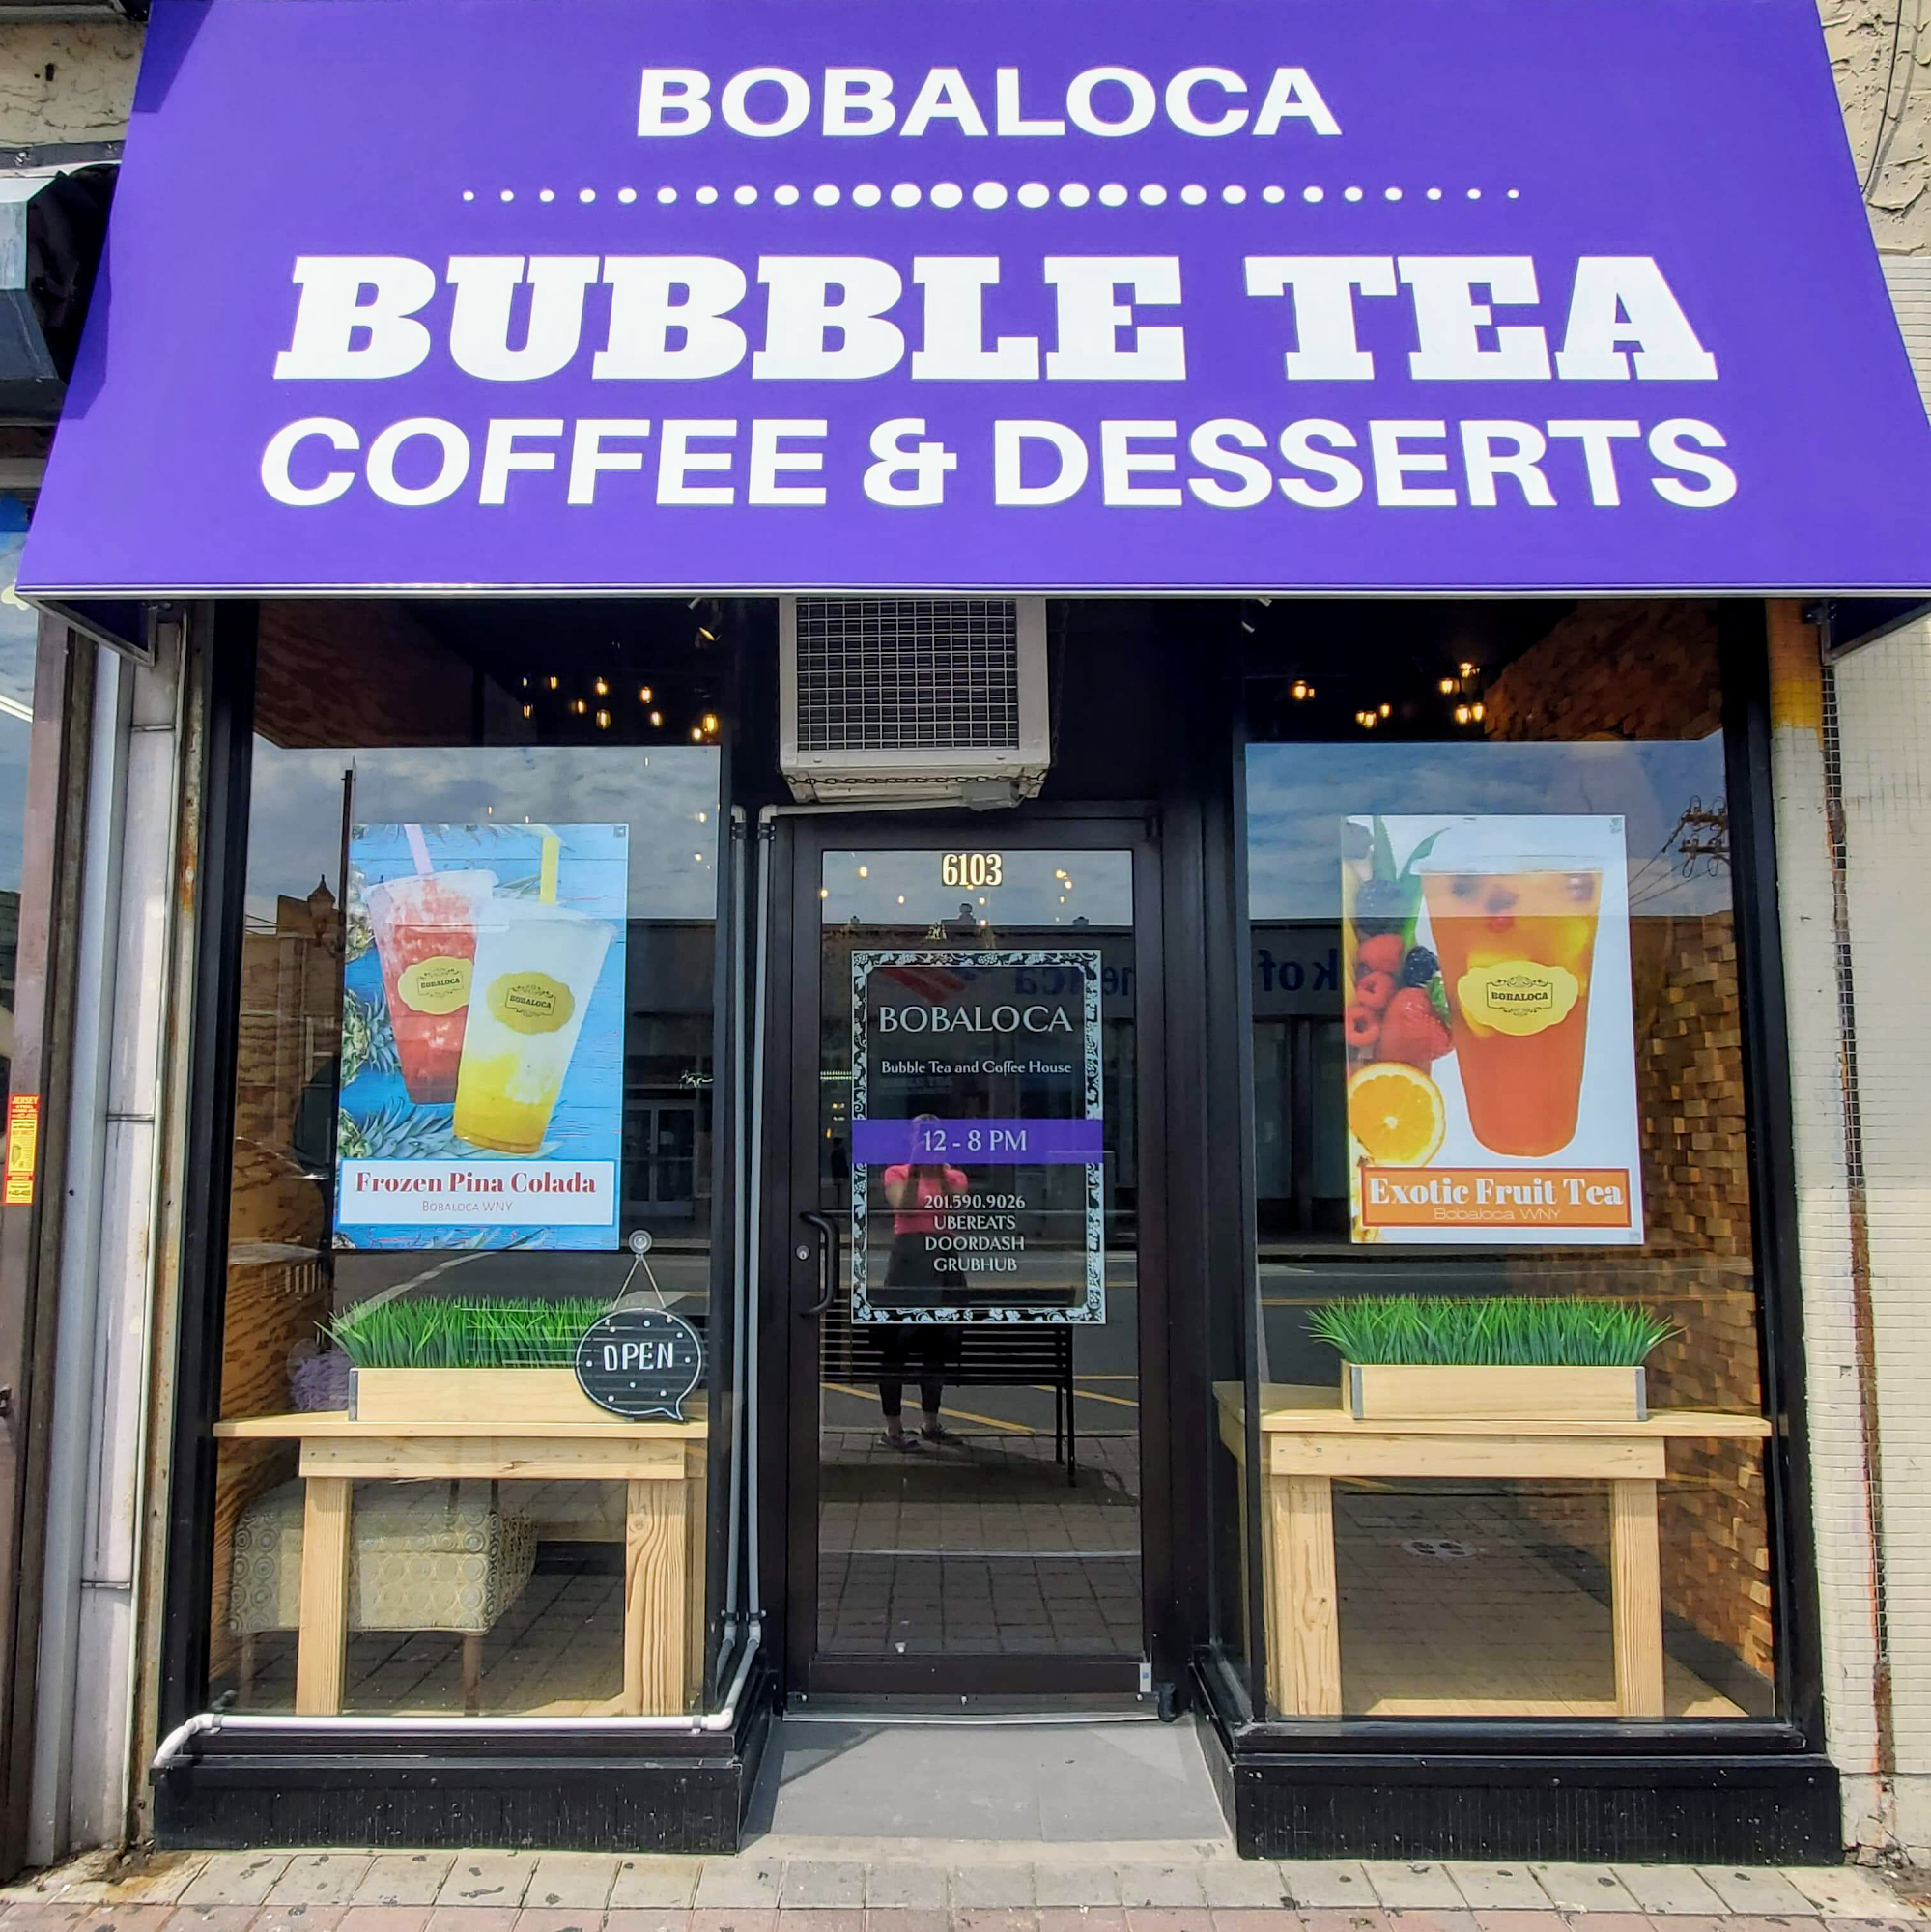 Bobaloca Bubble Tea and Coffee House